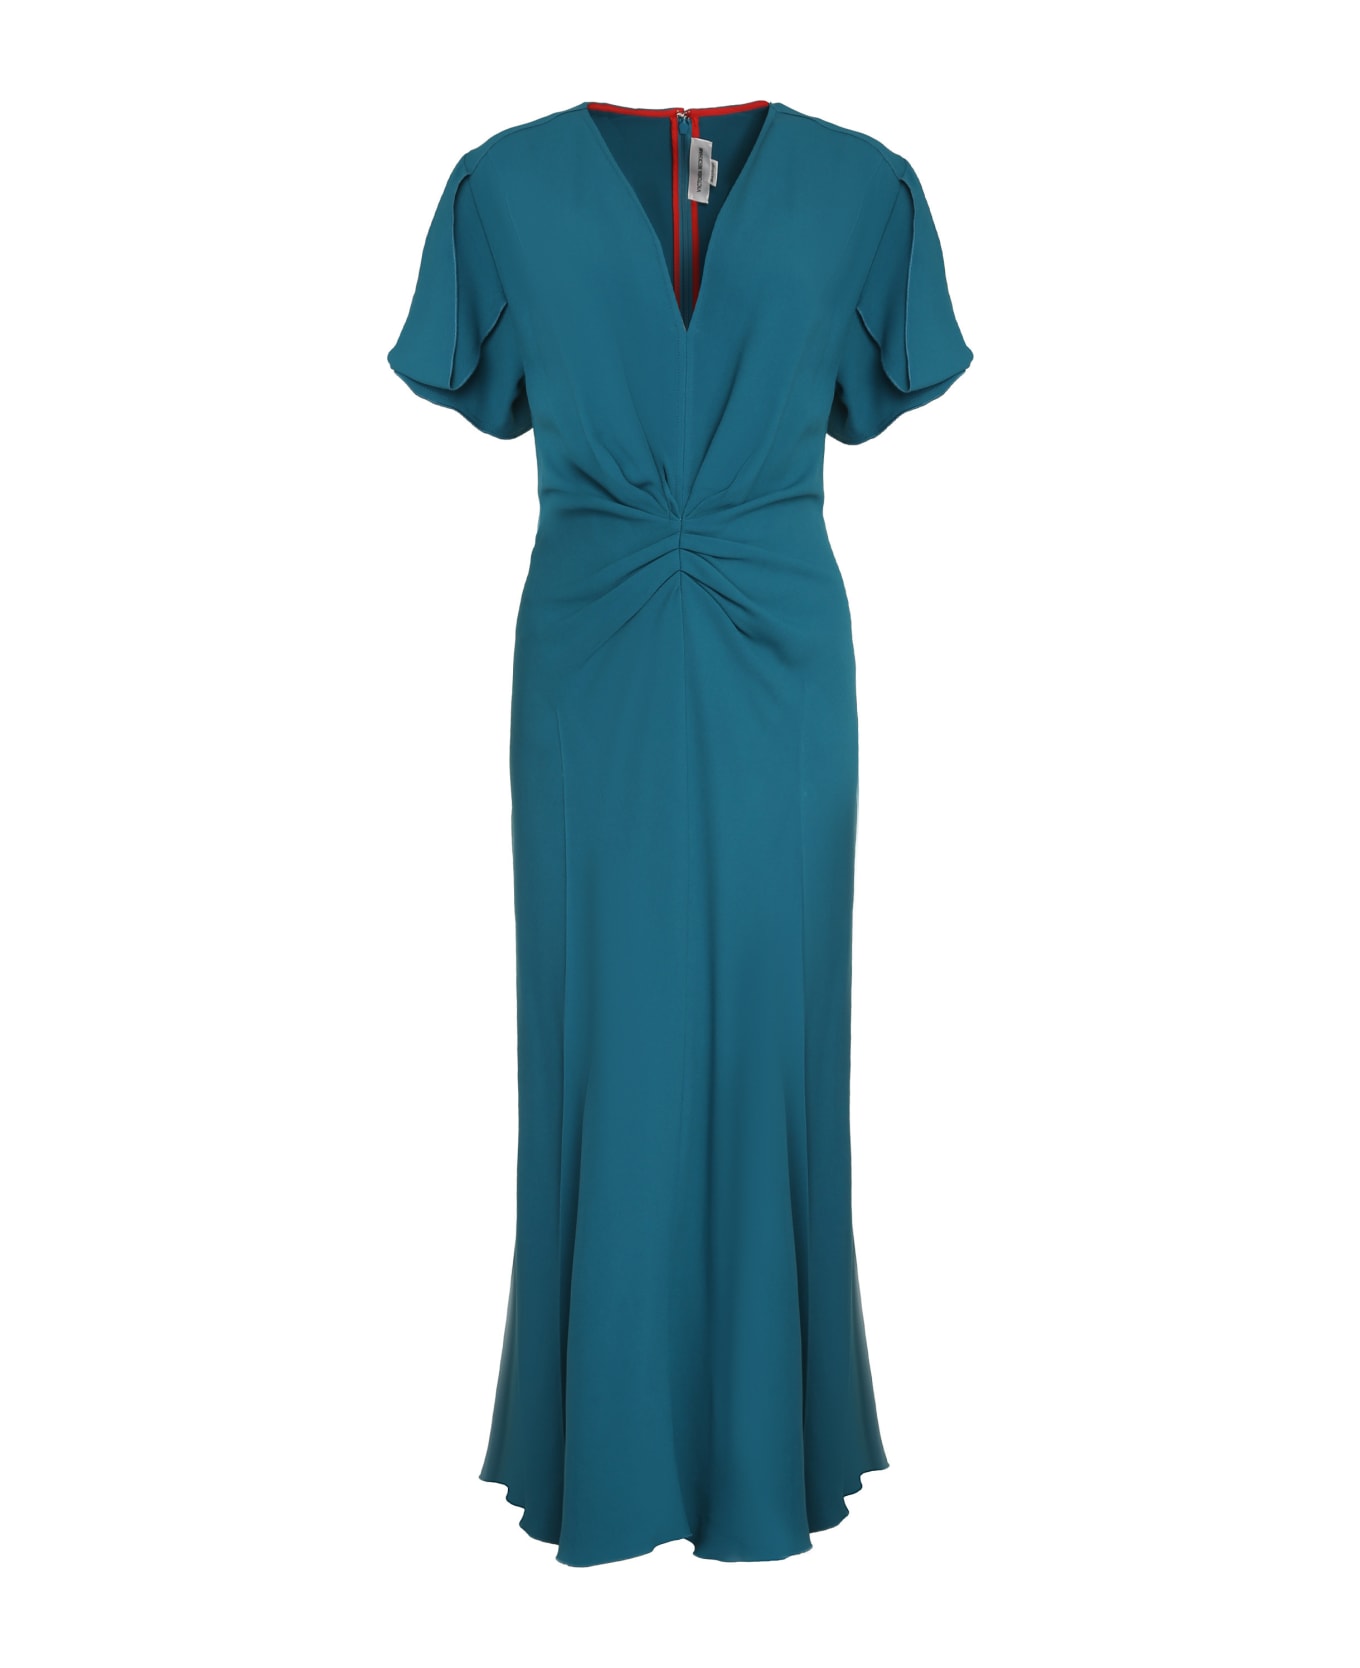 Victoria Beckham Stretch Viscose Dress - turquoise